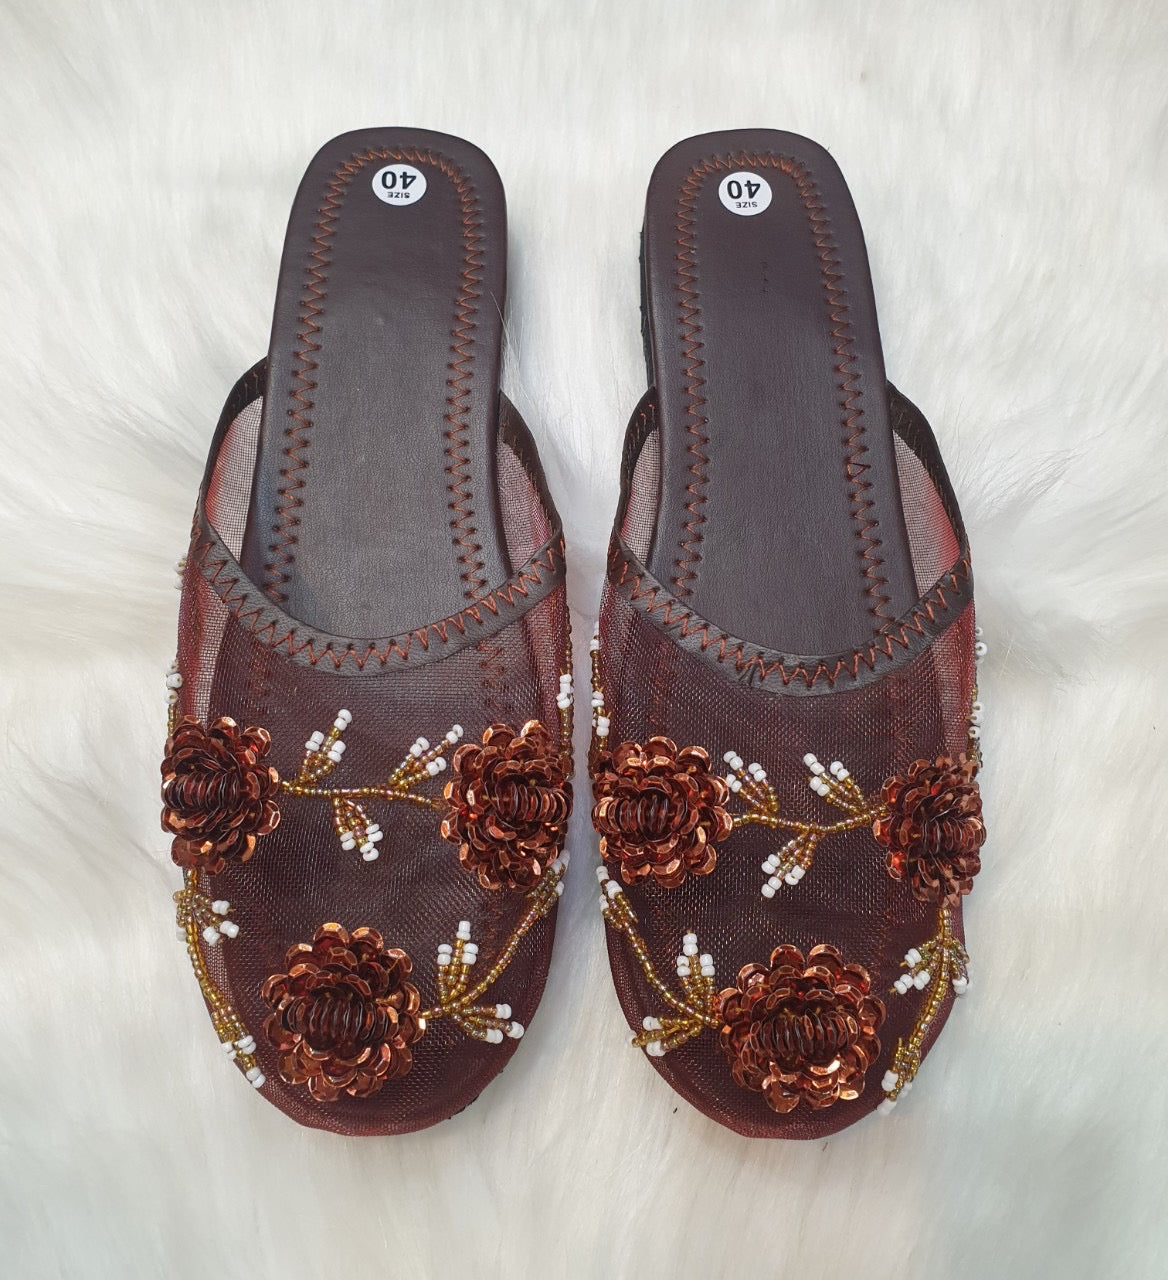 Vietnam sandal